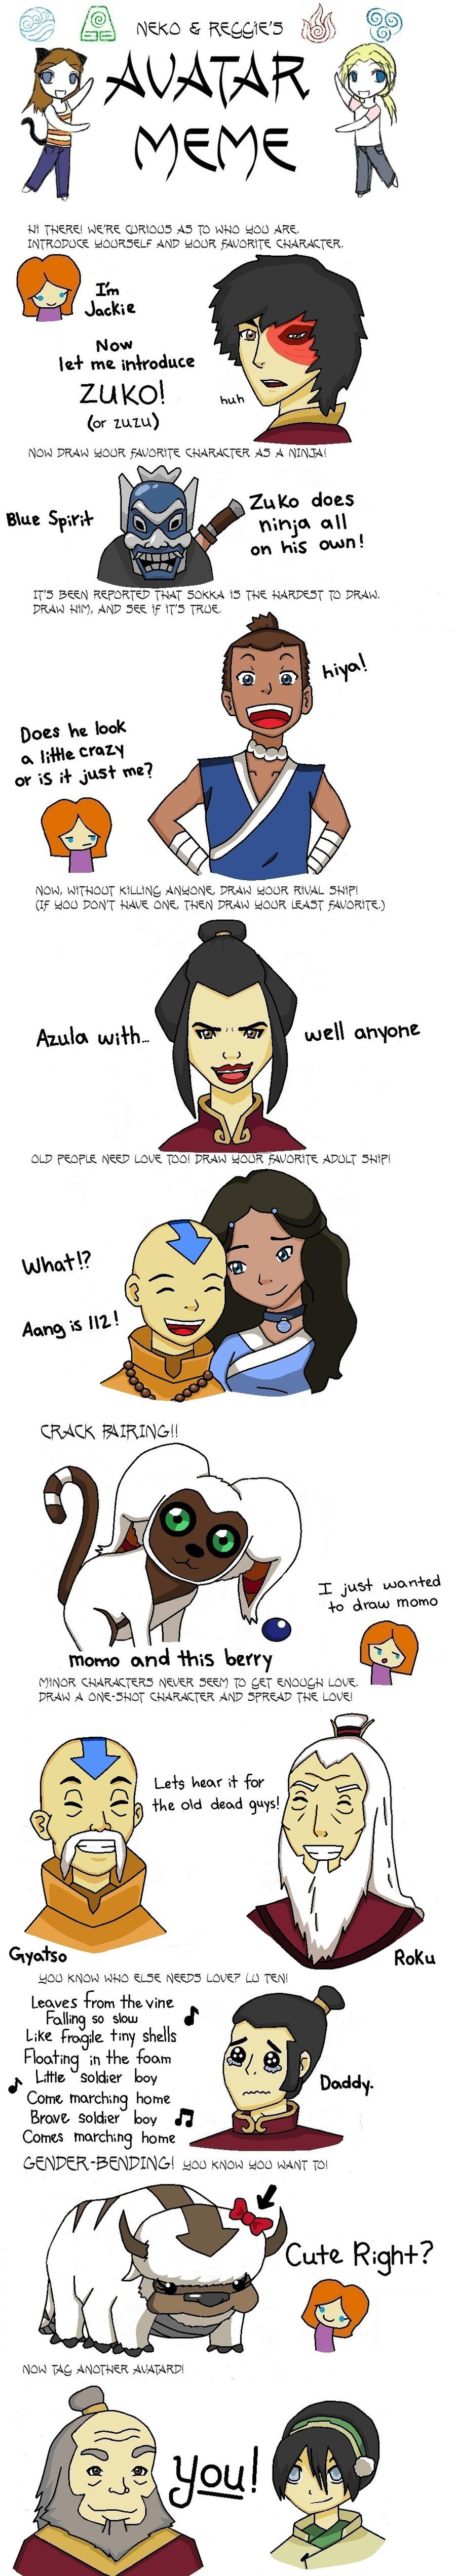 Avatar the Last Airbender Meme by Jackie-lyn on DeviantArt